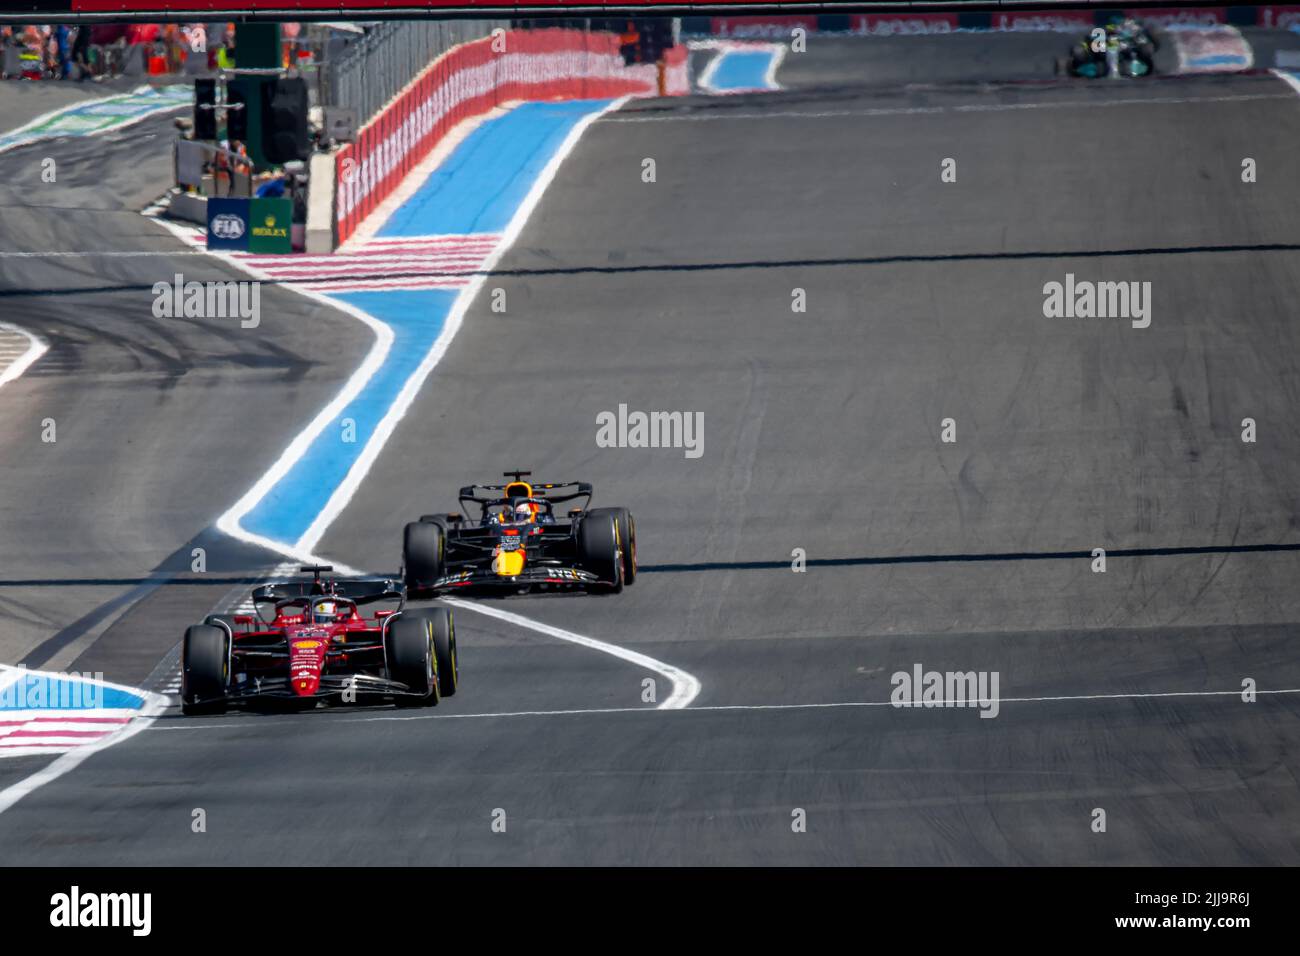 France to host Round 12 of 2022 Formula 1 World Championship